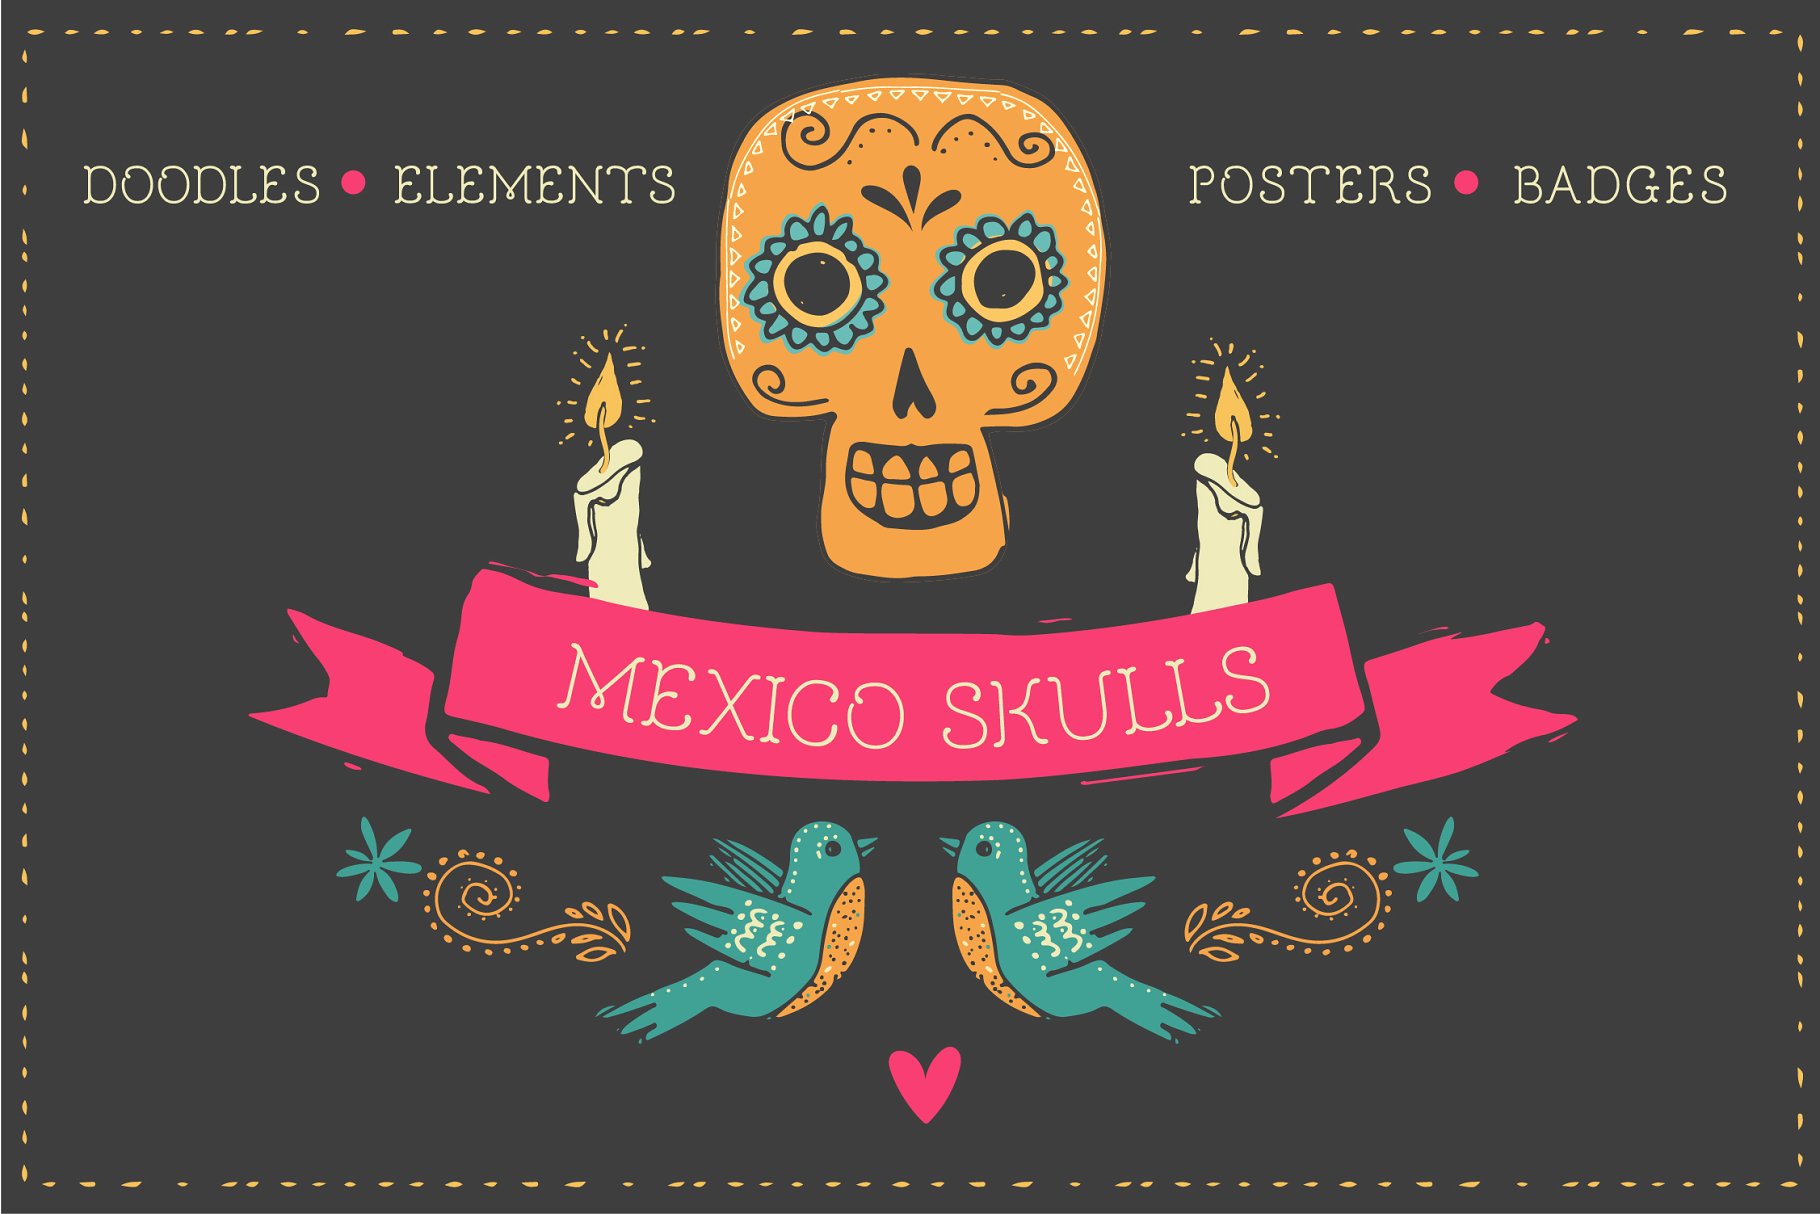 墨西哥骷髅涂鸦＆民族元素 Mexico -skull doodles & elements插图